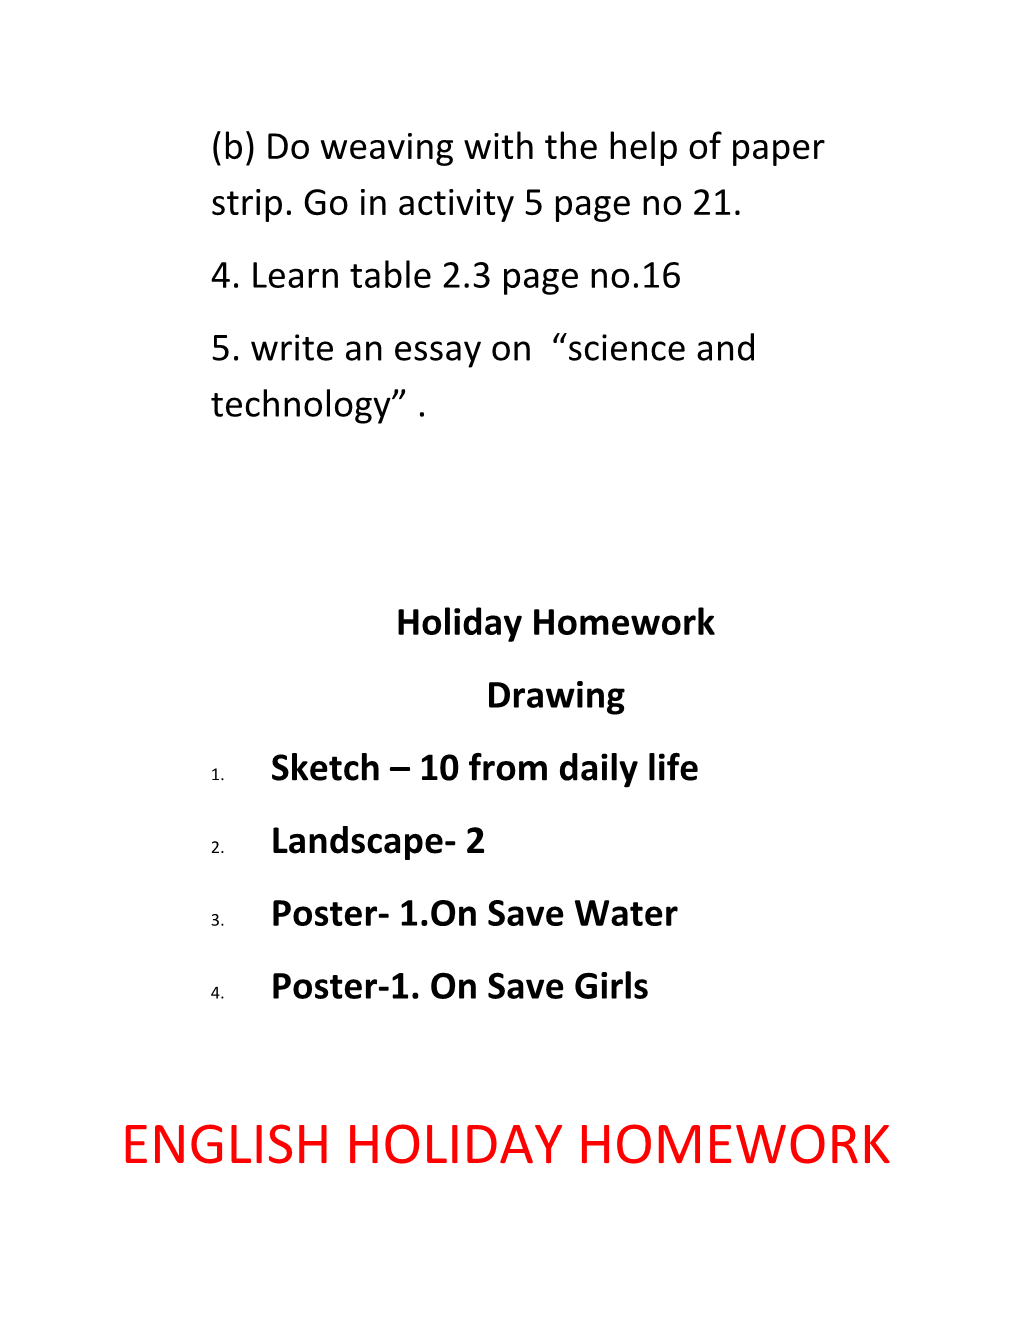 Summer Break Holiday Homework